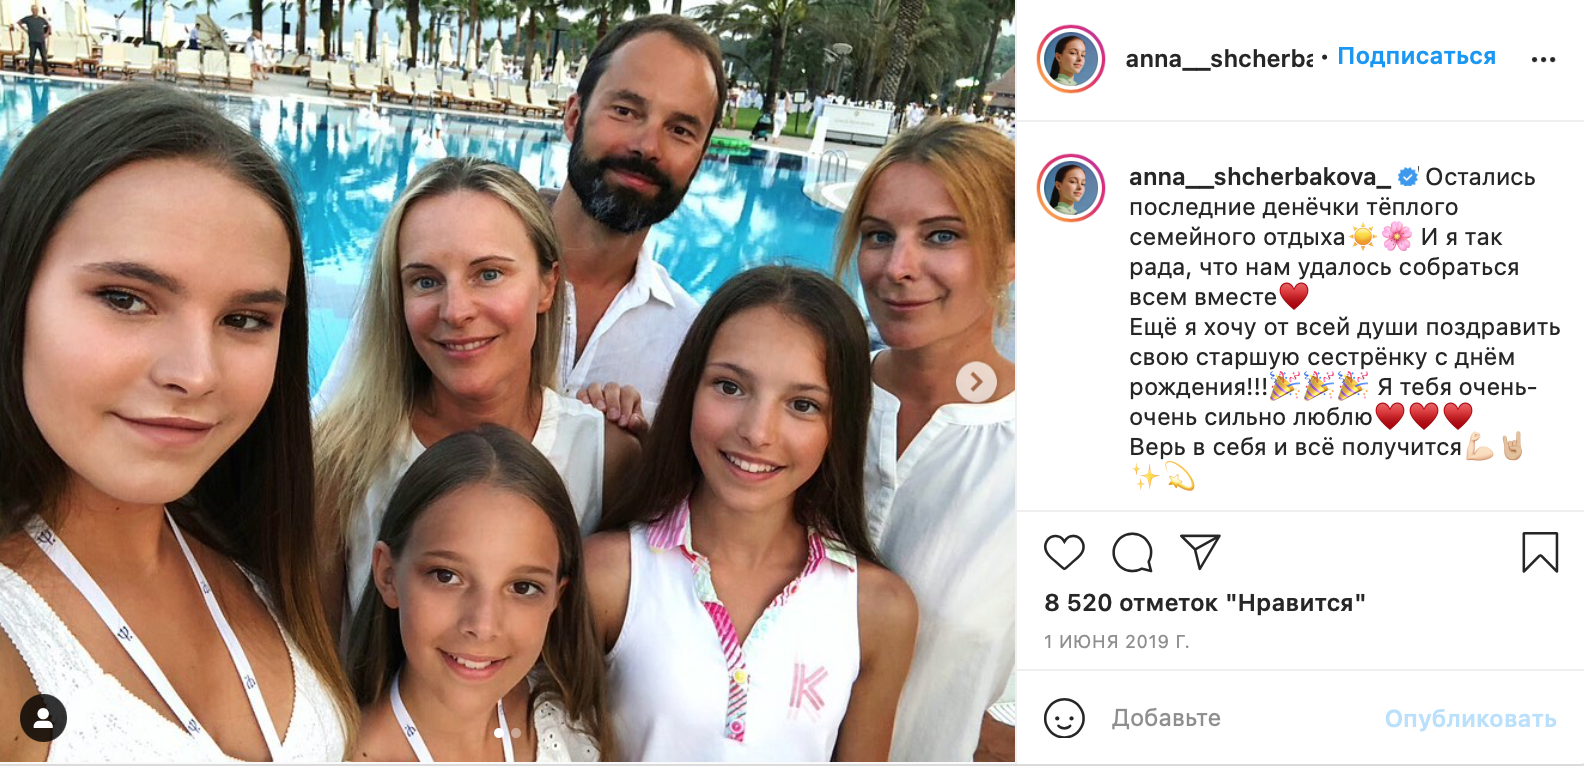 Anna shcherbakova family